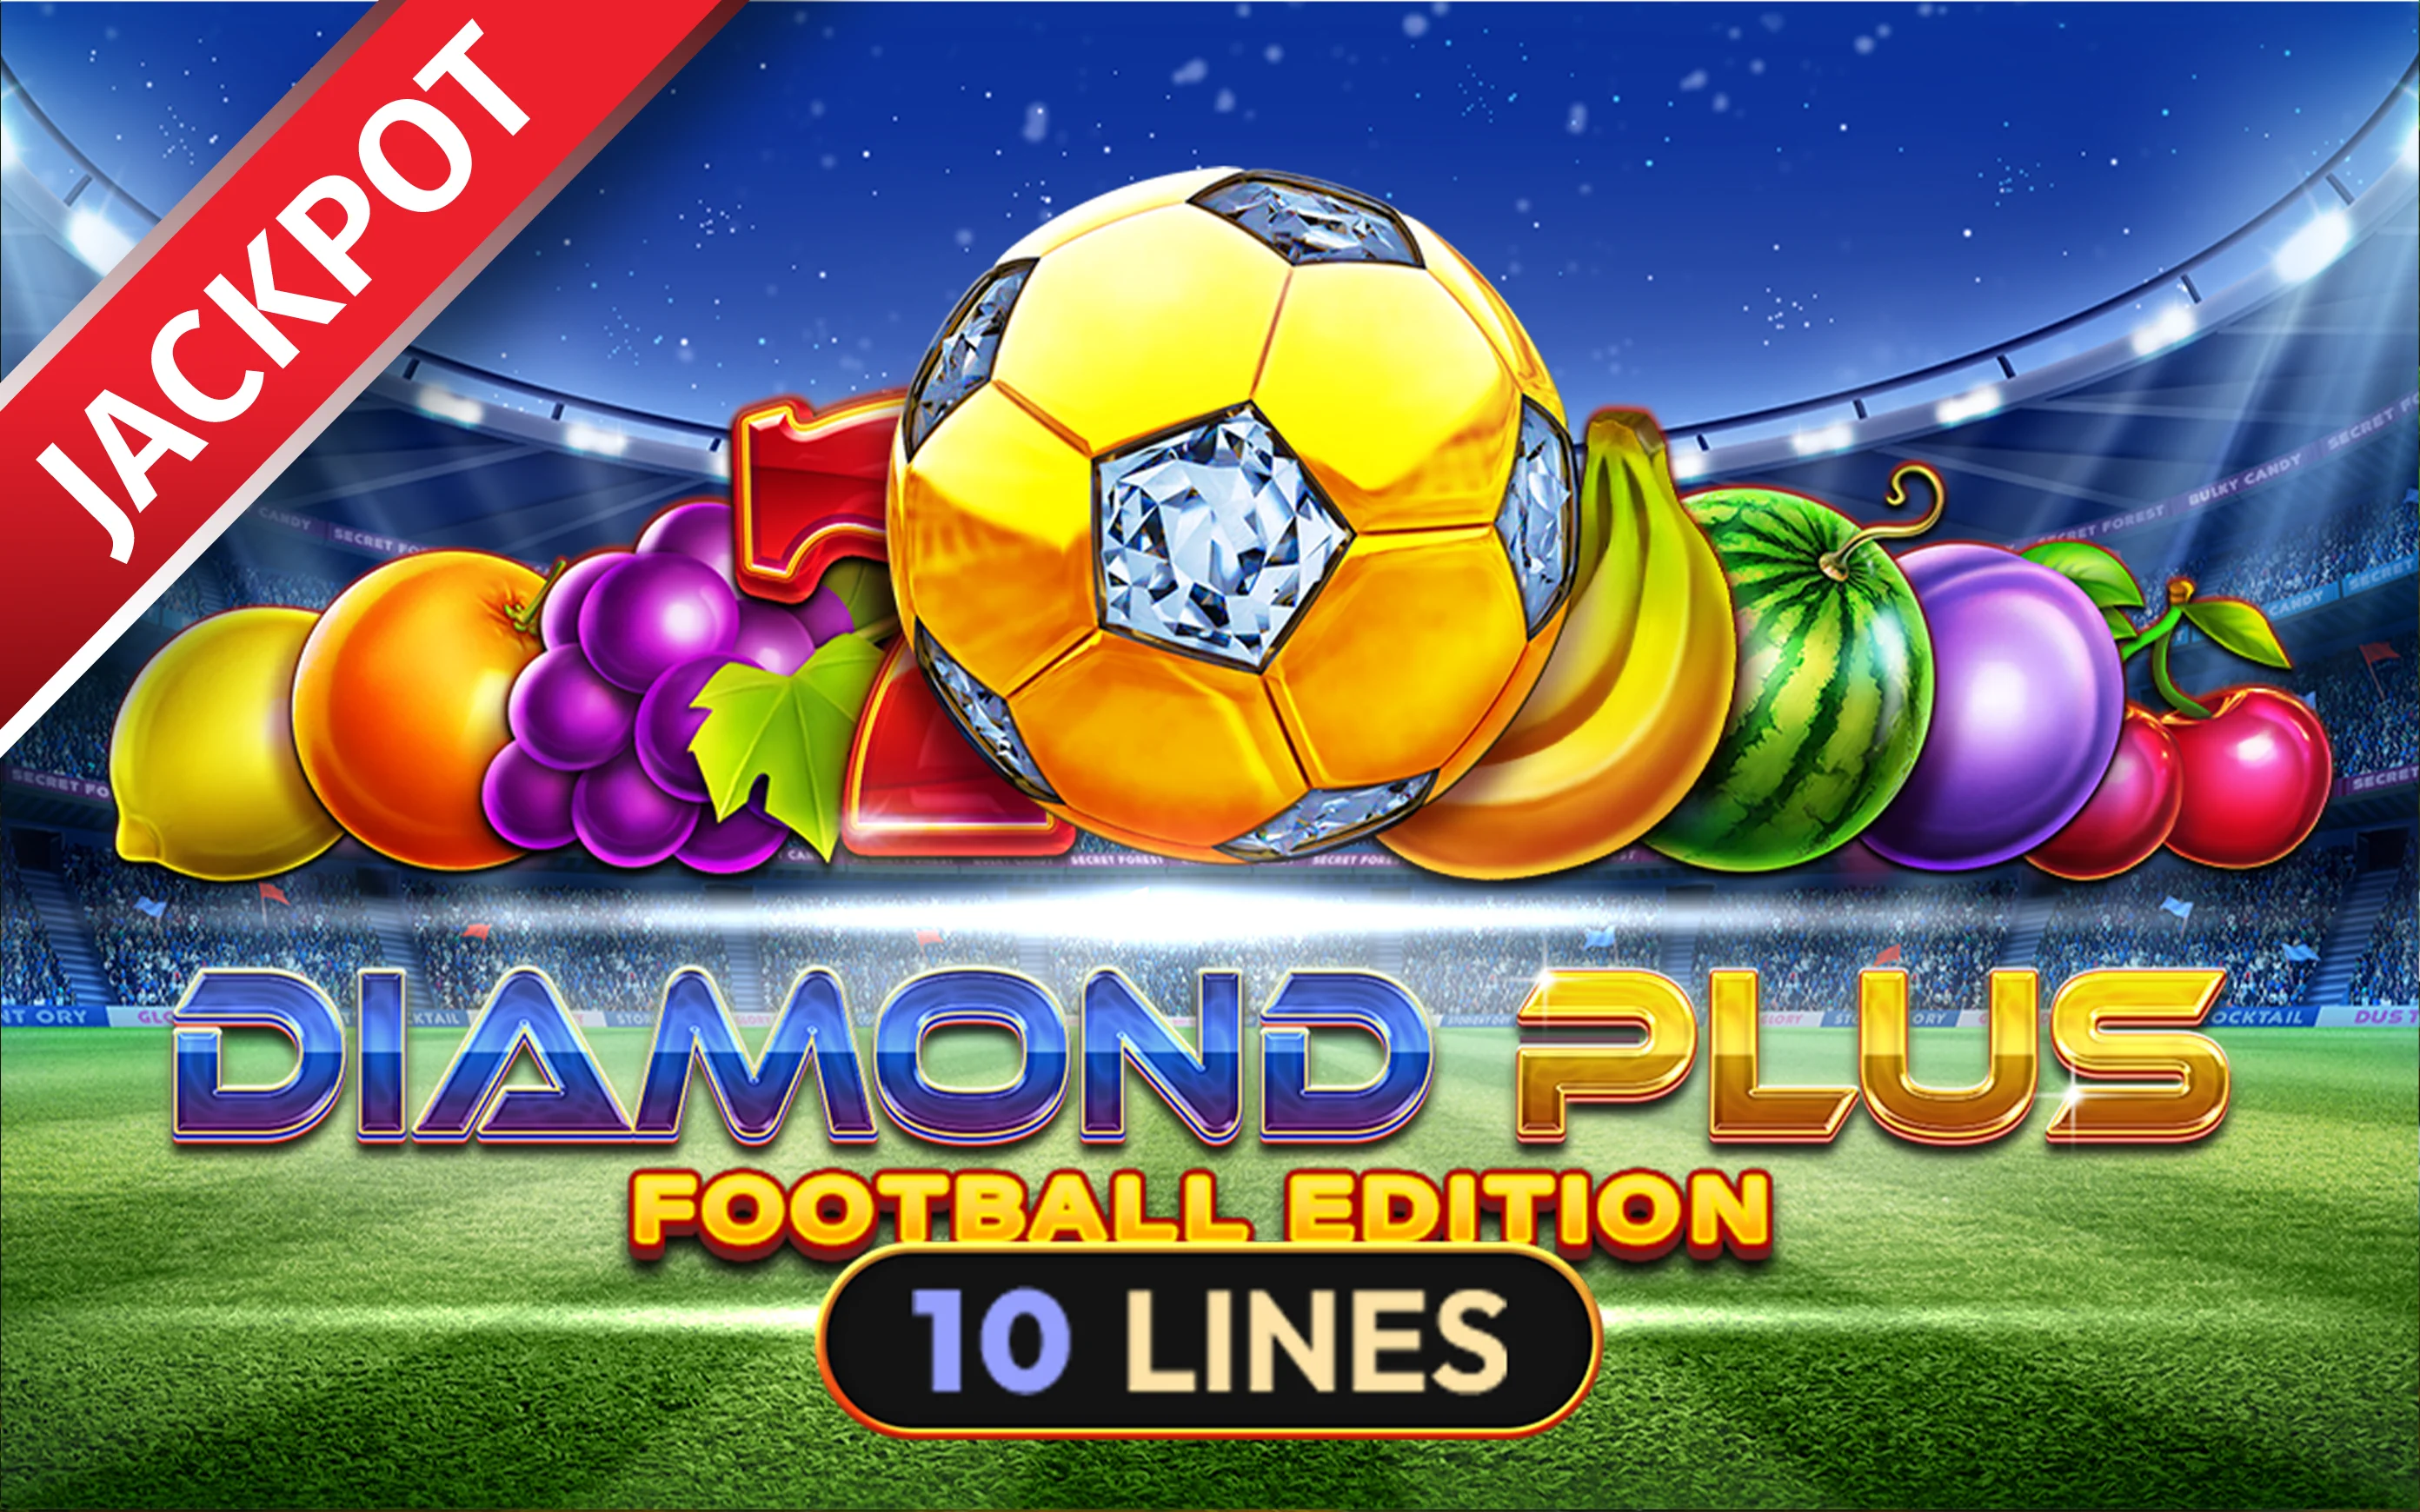 Gioca a Diamond Plus Football Edition sul casino online Starcasino.be